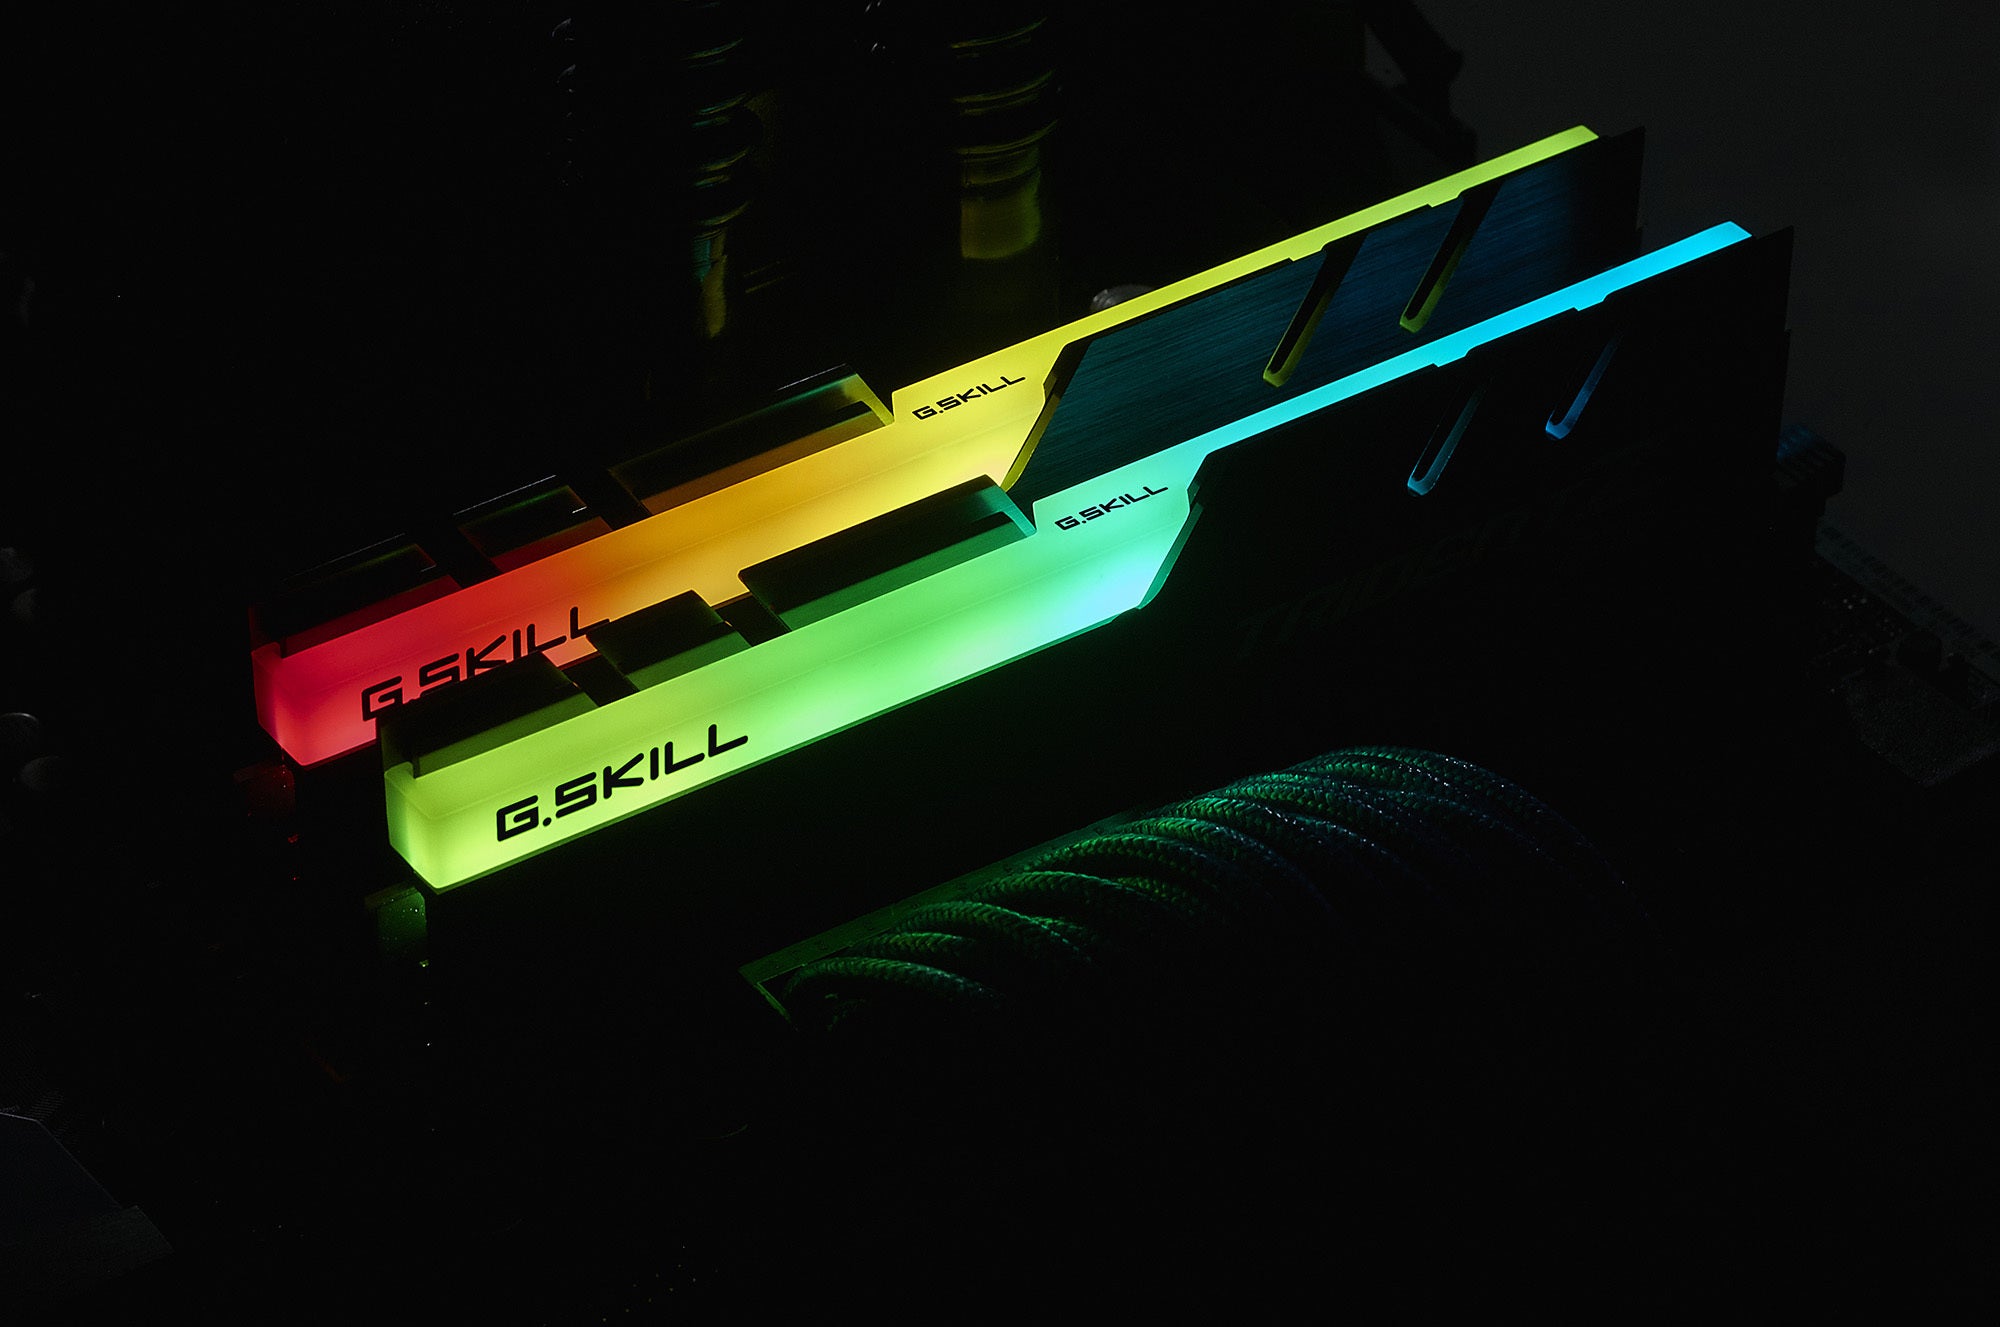 Pimp your PC with an RGB lighting kit | PCWorld